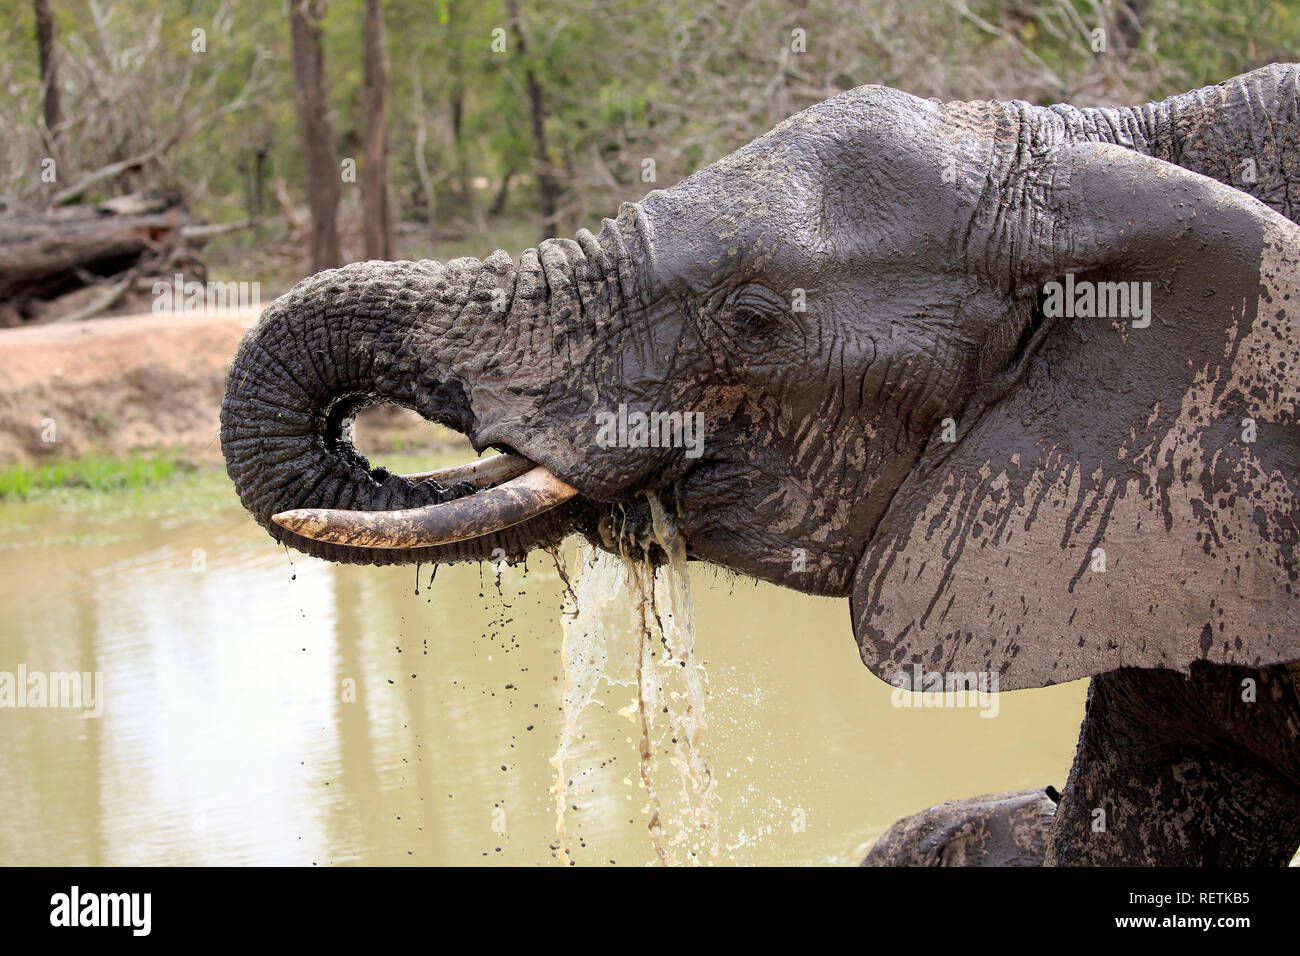 Afrikanischer Elefant, Erwachsene am Wasser trinken, Porträt, Sabi Sand Game Reserve, Krüger Nationalpark, Südafrika, Afrika, (Loxodonta africana) Stockfoto